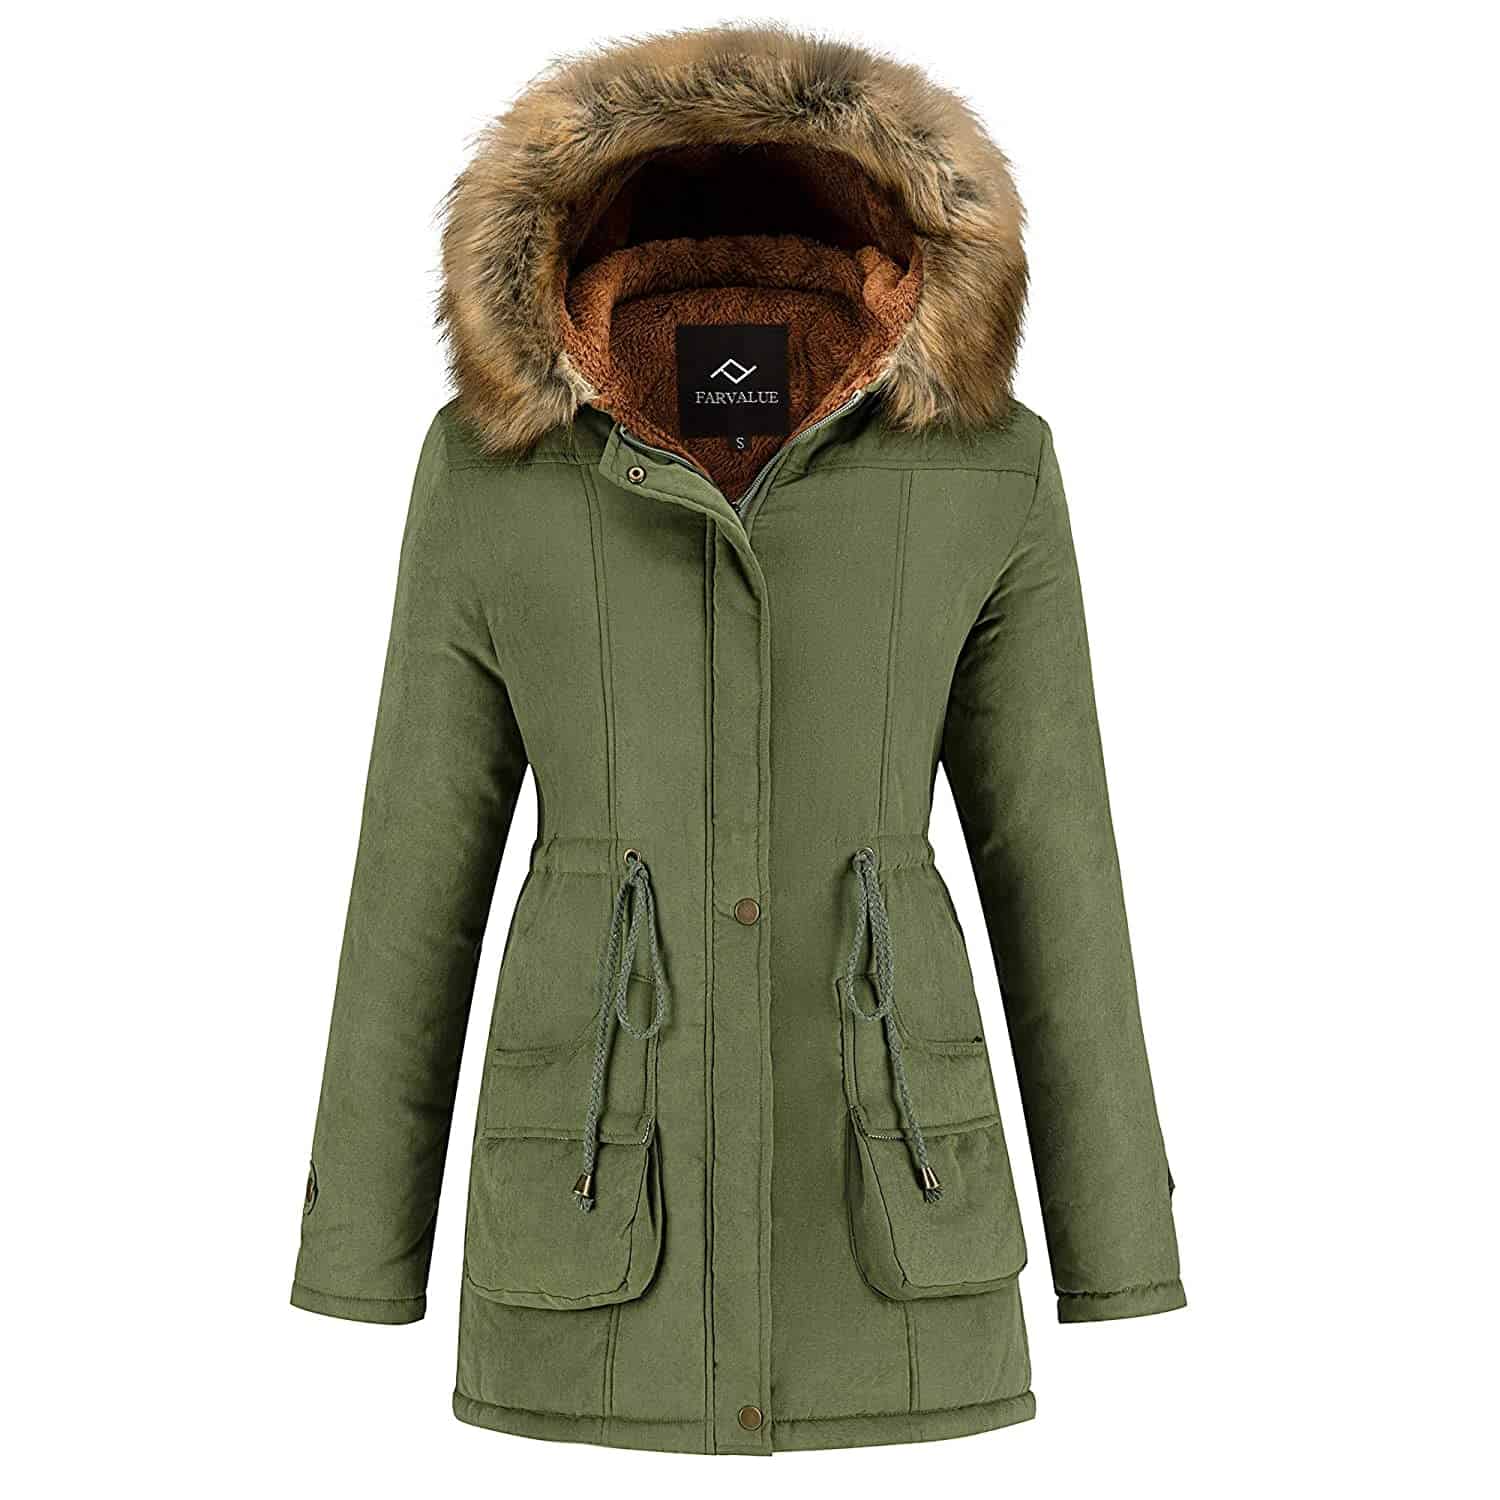 Farvalue Women's Winter Coat Hooded